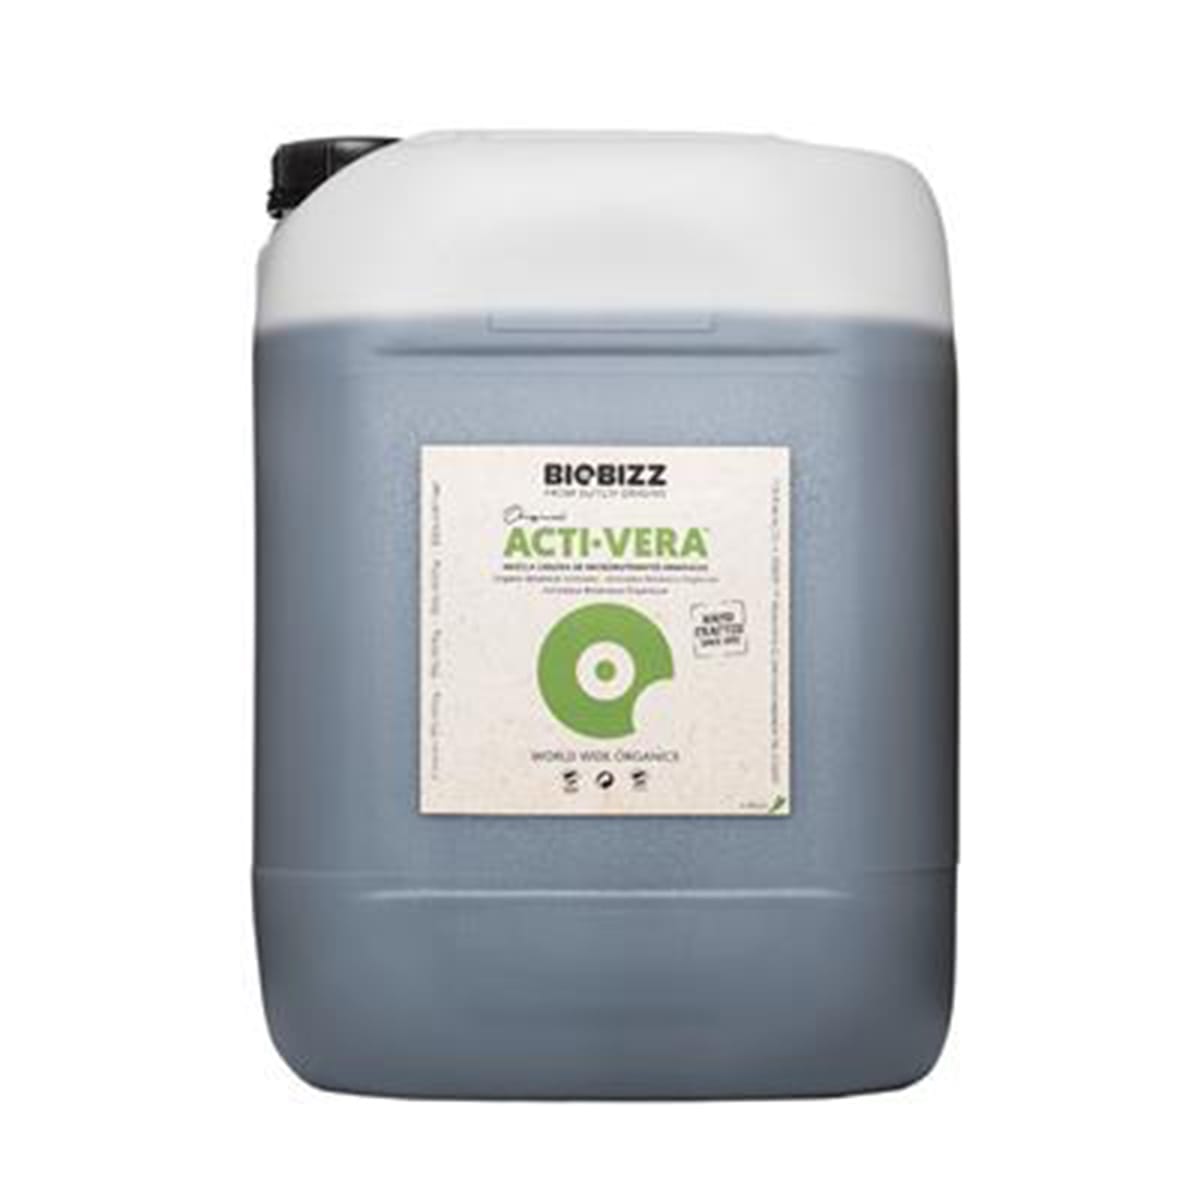 Biobizz Acti-Vera 20 Liter